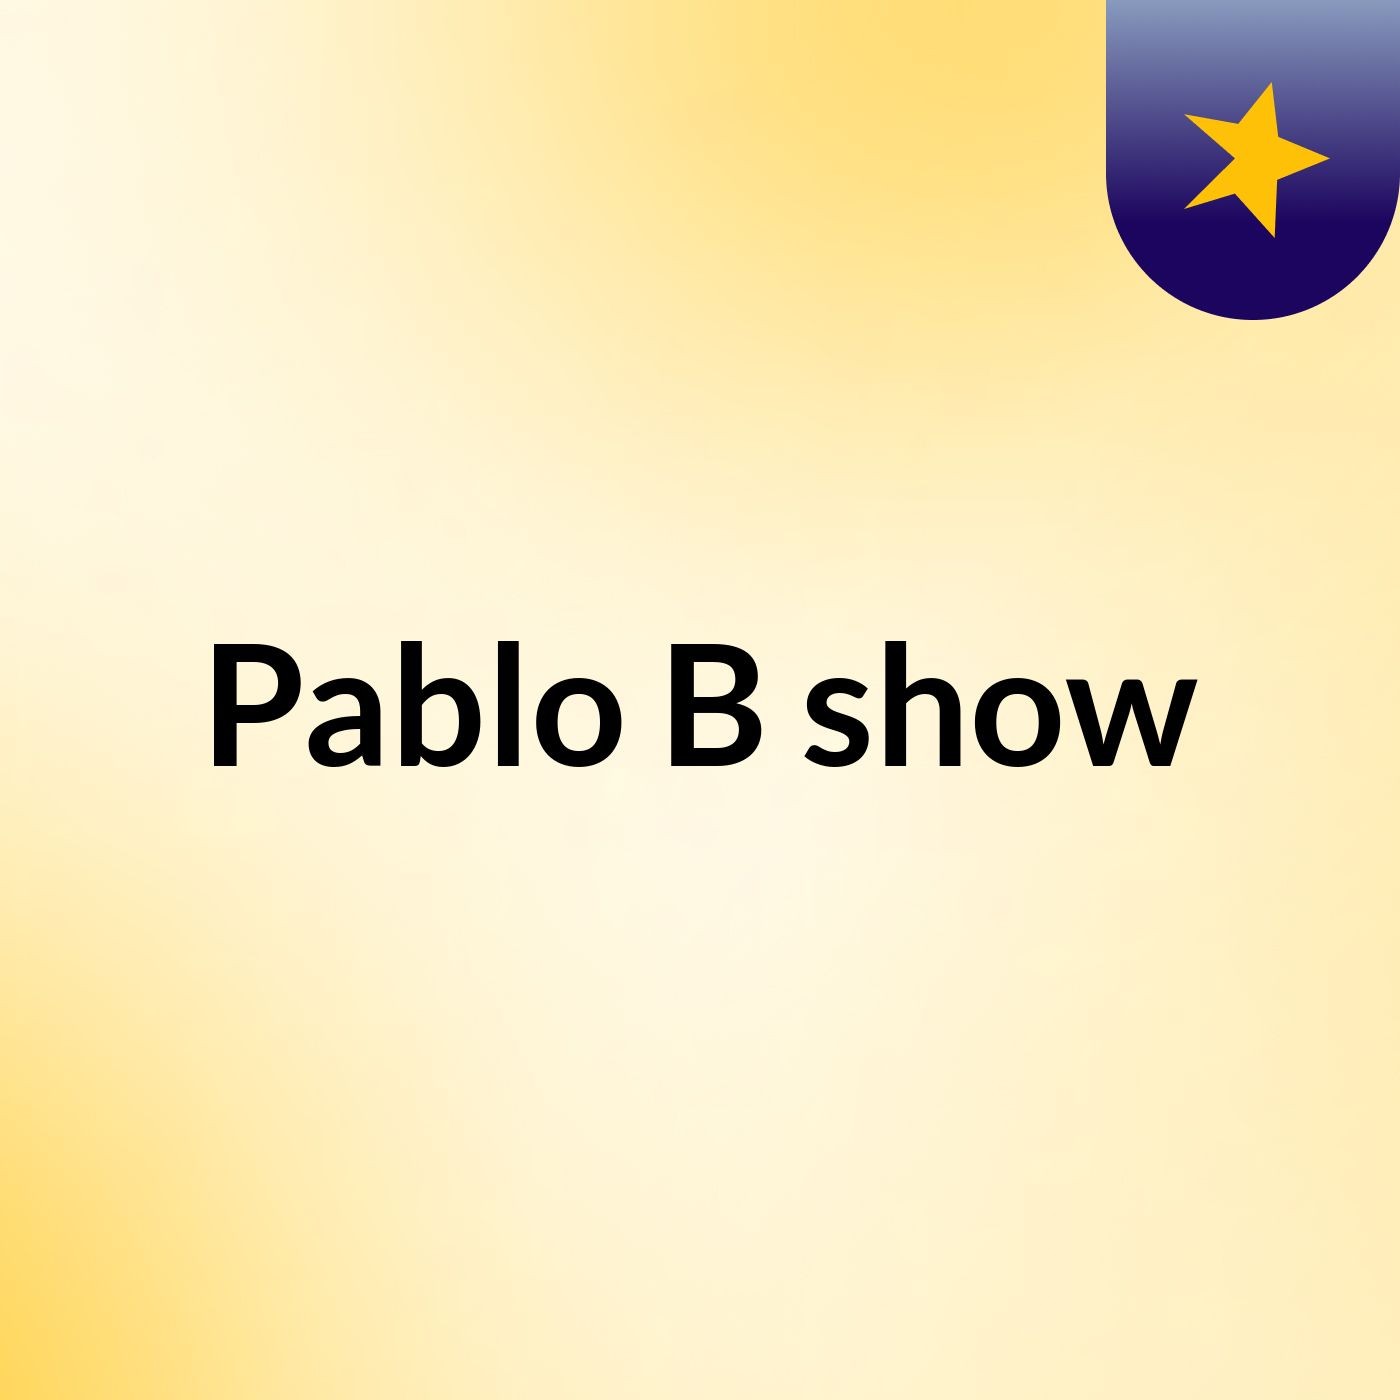 Pablo B show